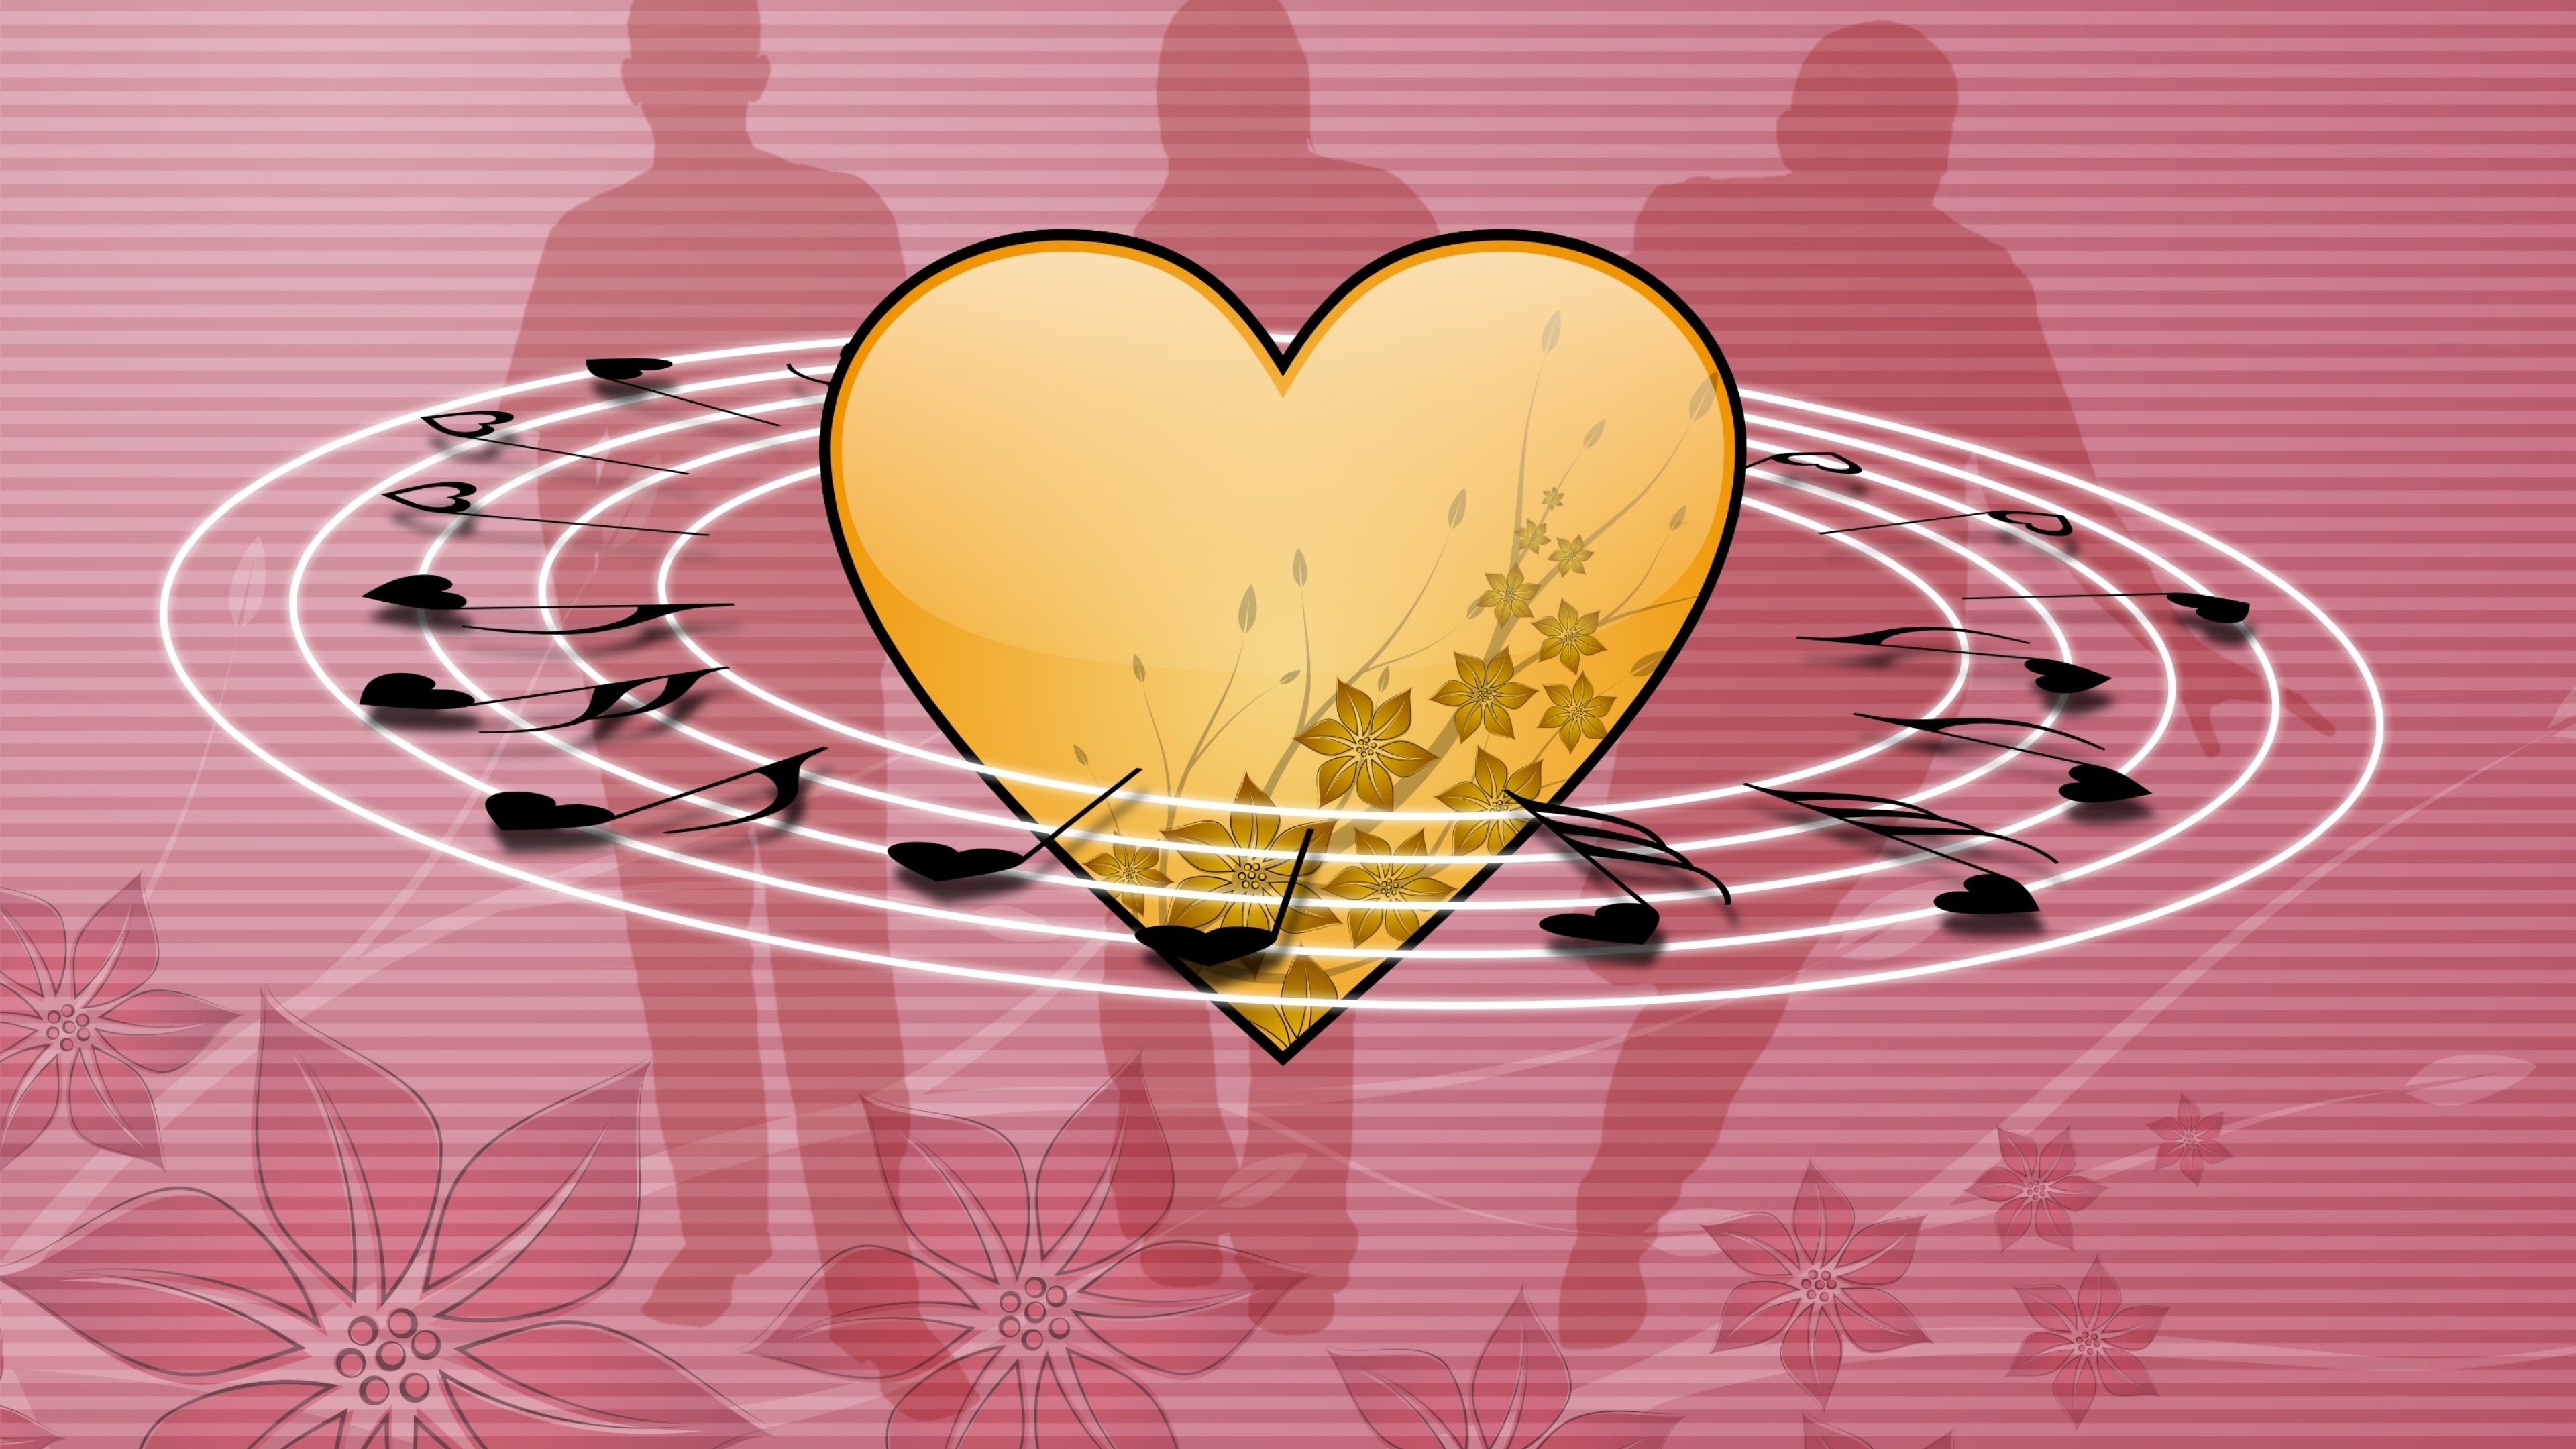 Music 5 love